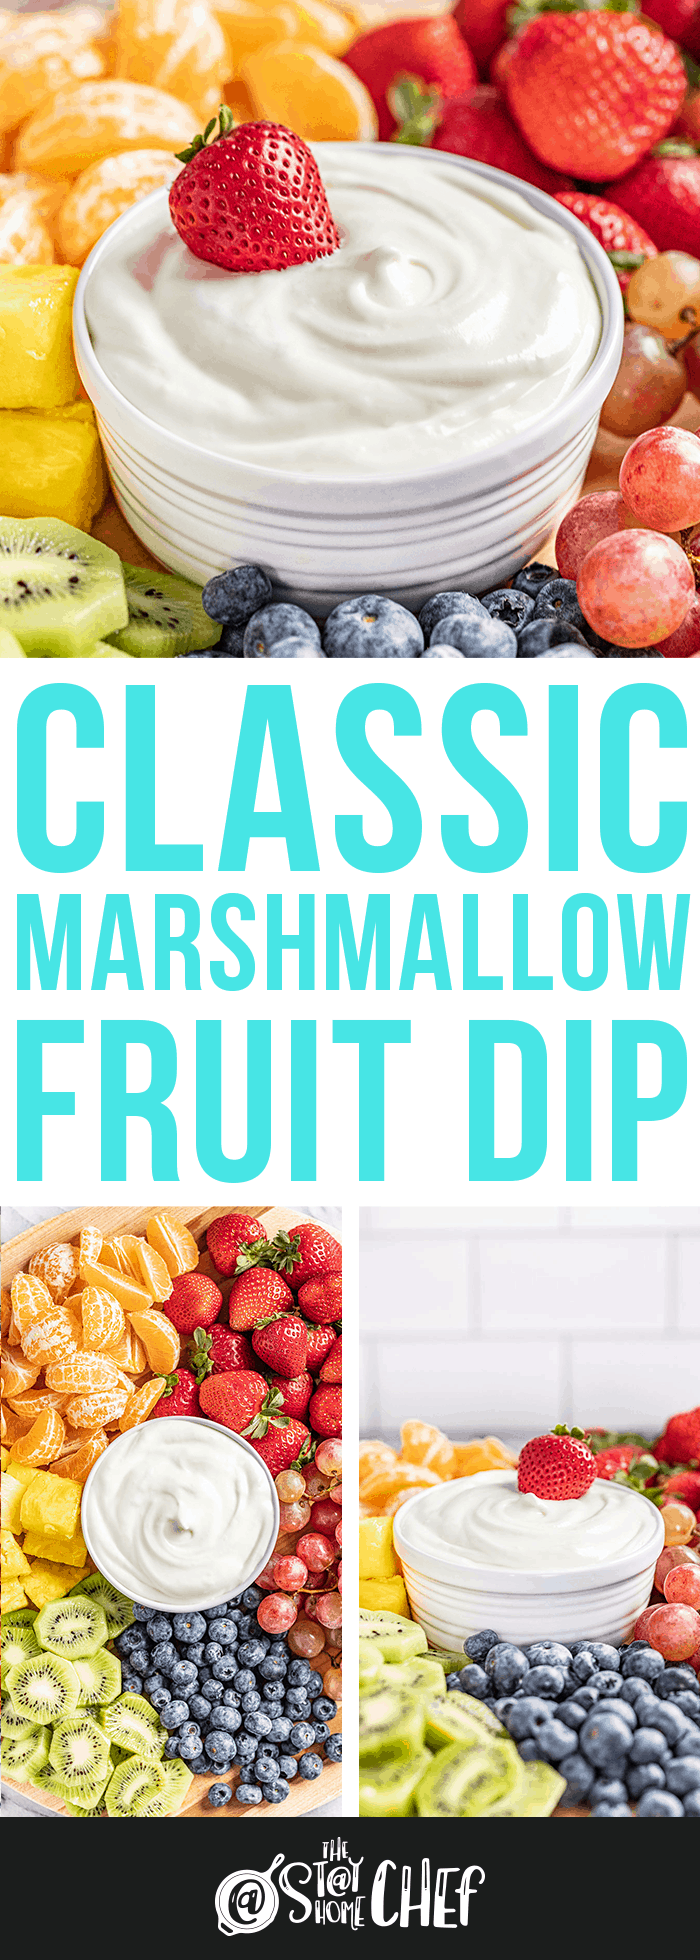 Classic Marshmallow Fruit Dip